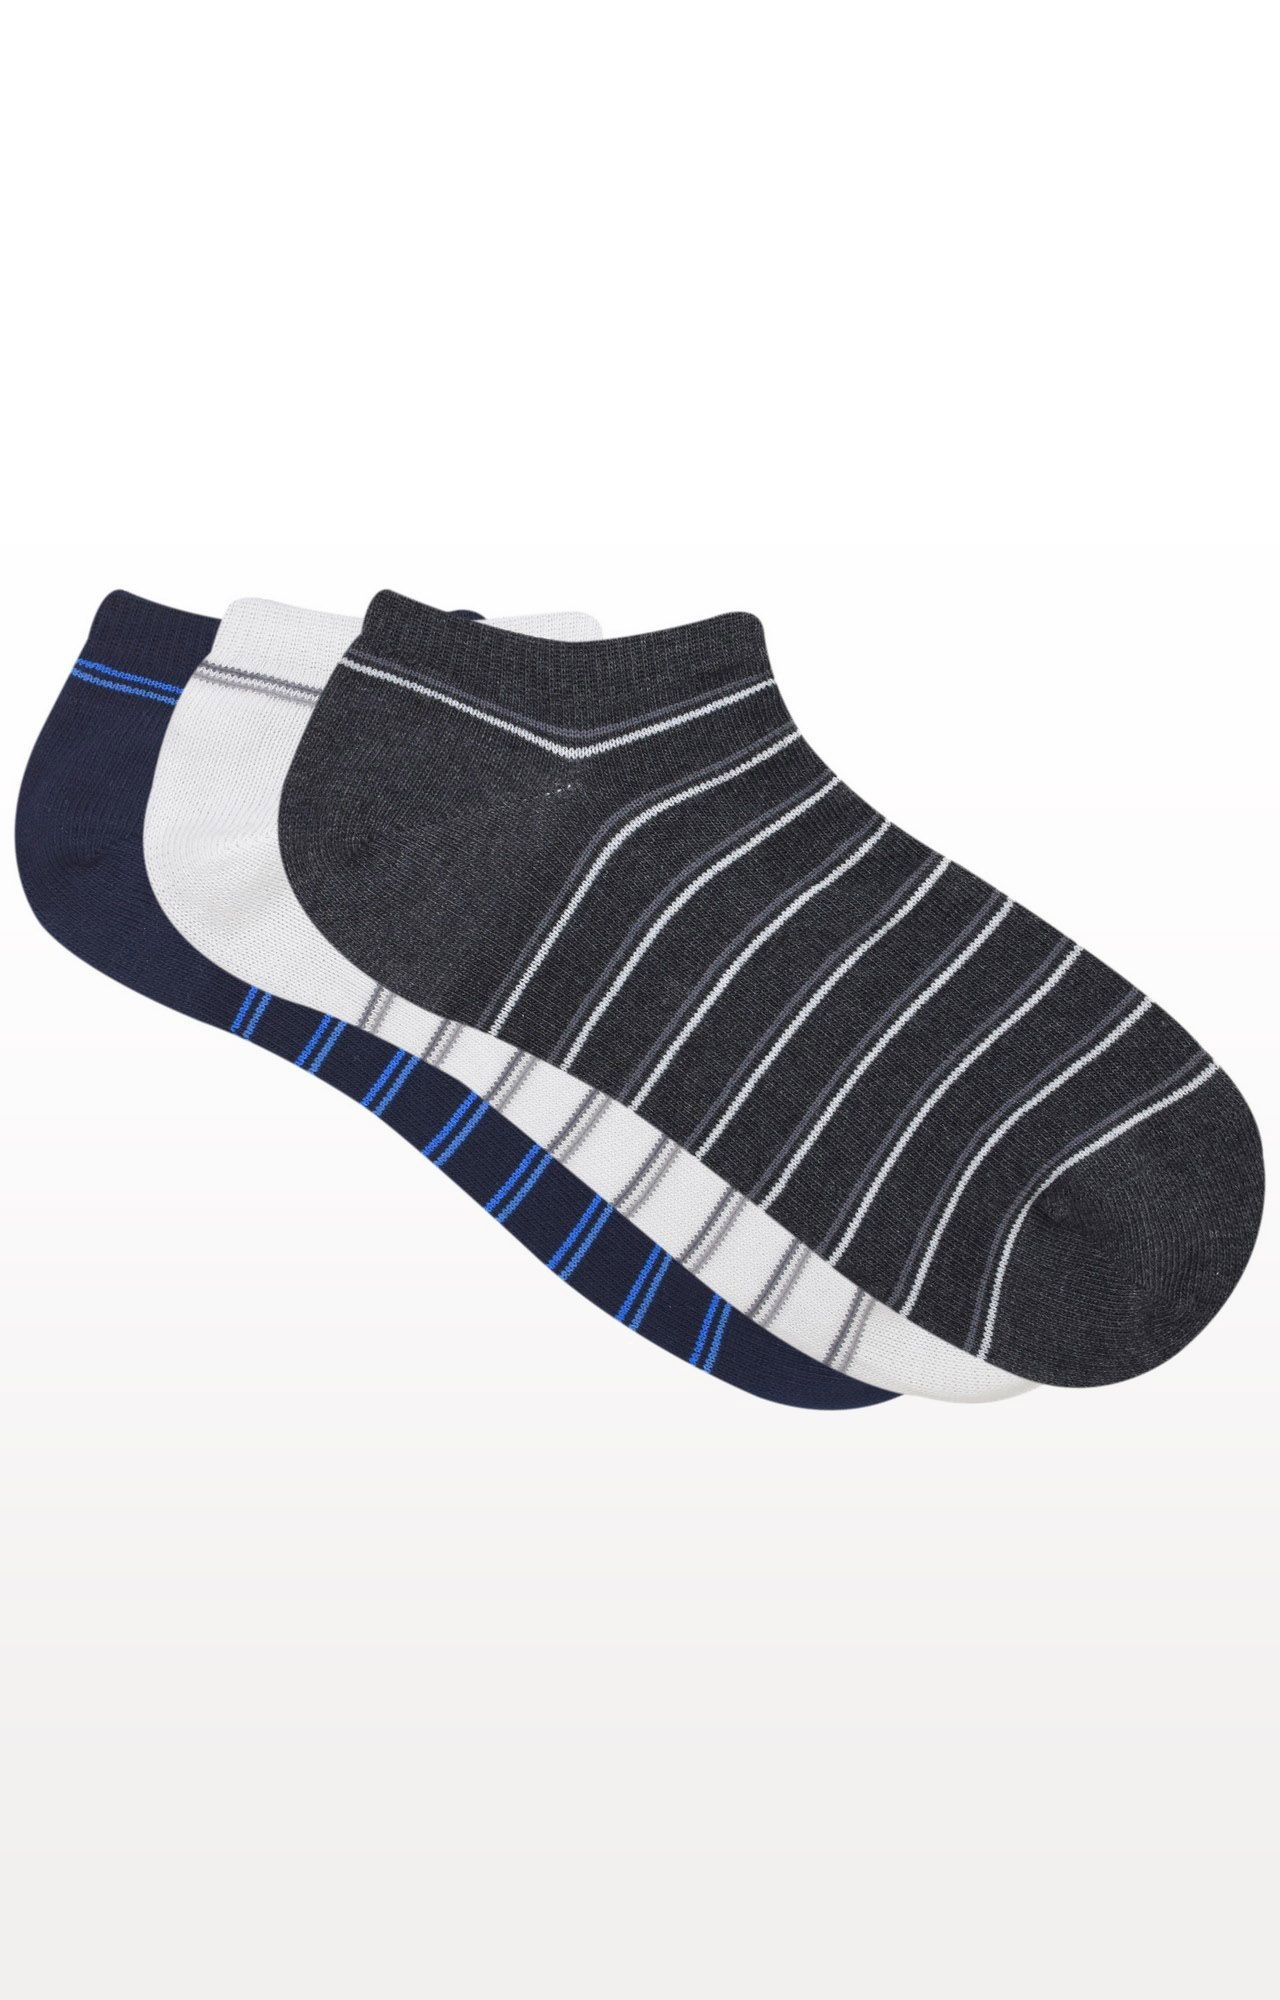 BALENZIA | Multi-Coloured Striped Socks (Pack of 3) 1